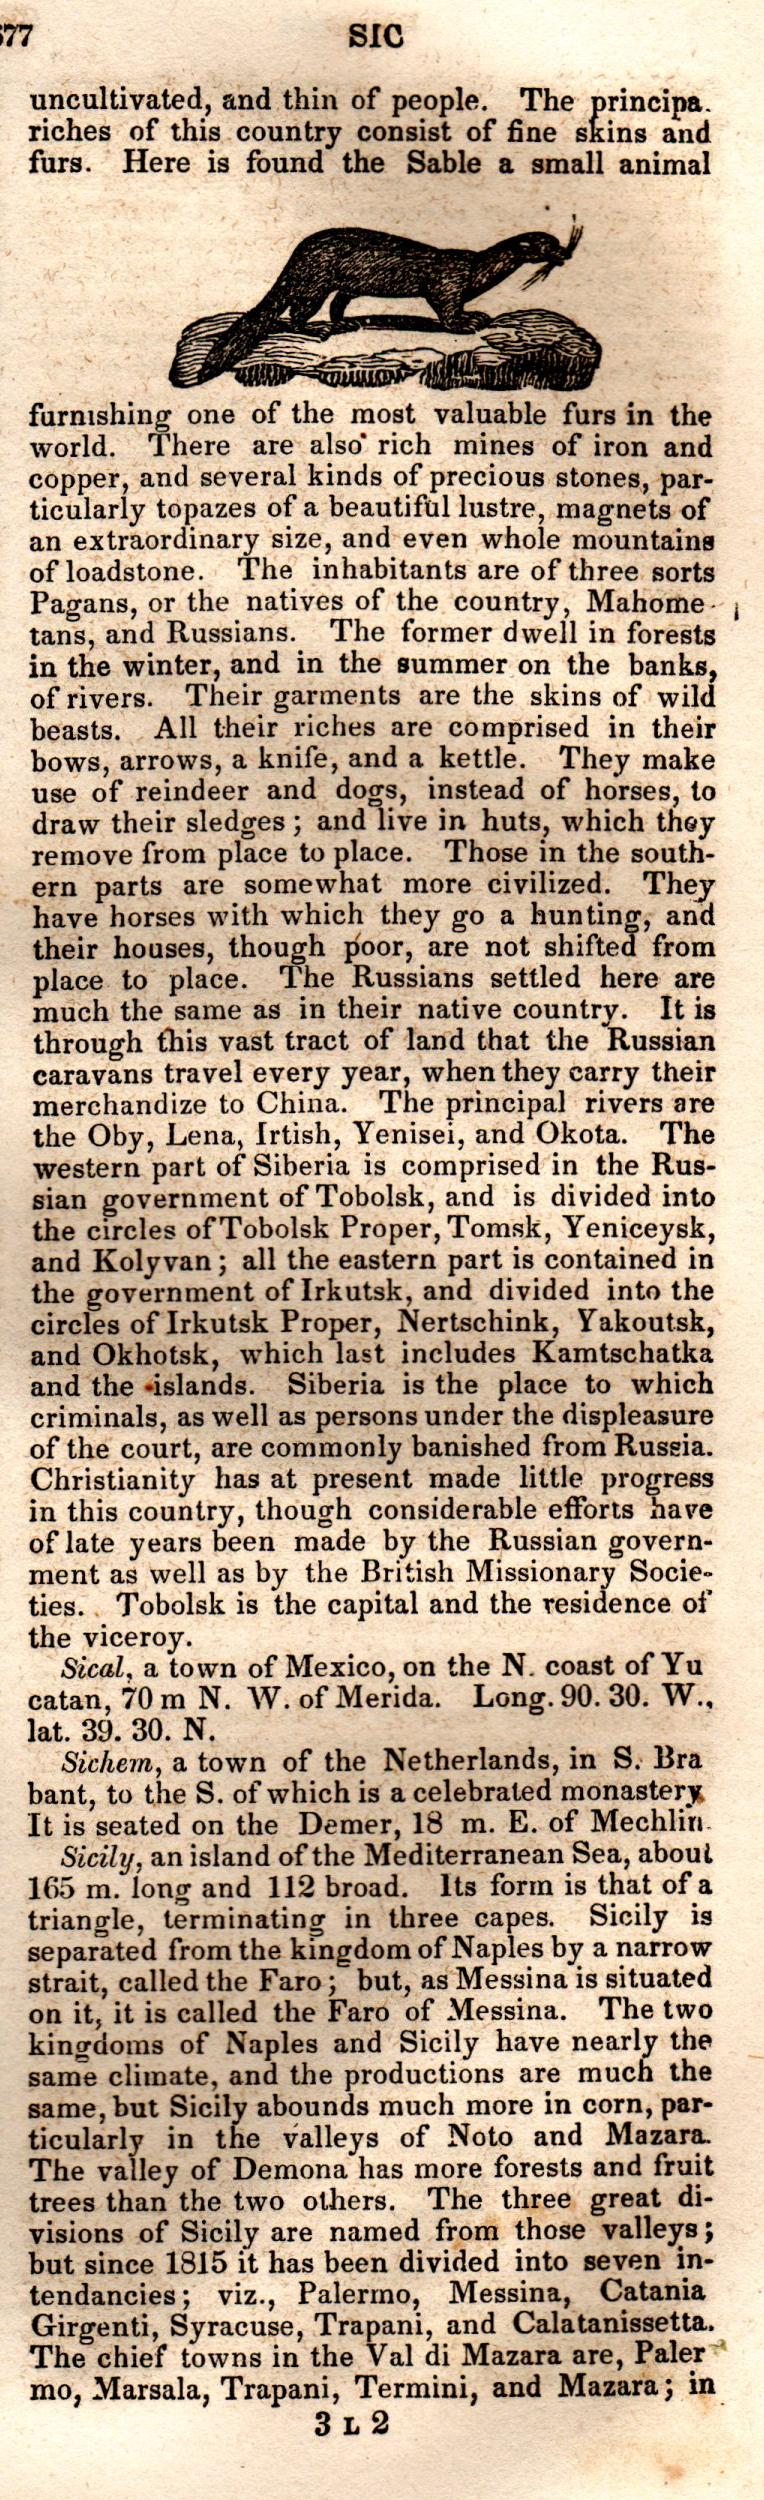 Brookes’ Universal Gazetteer (1850), Page 677 Right Column